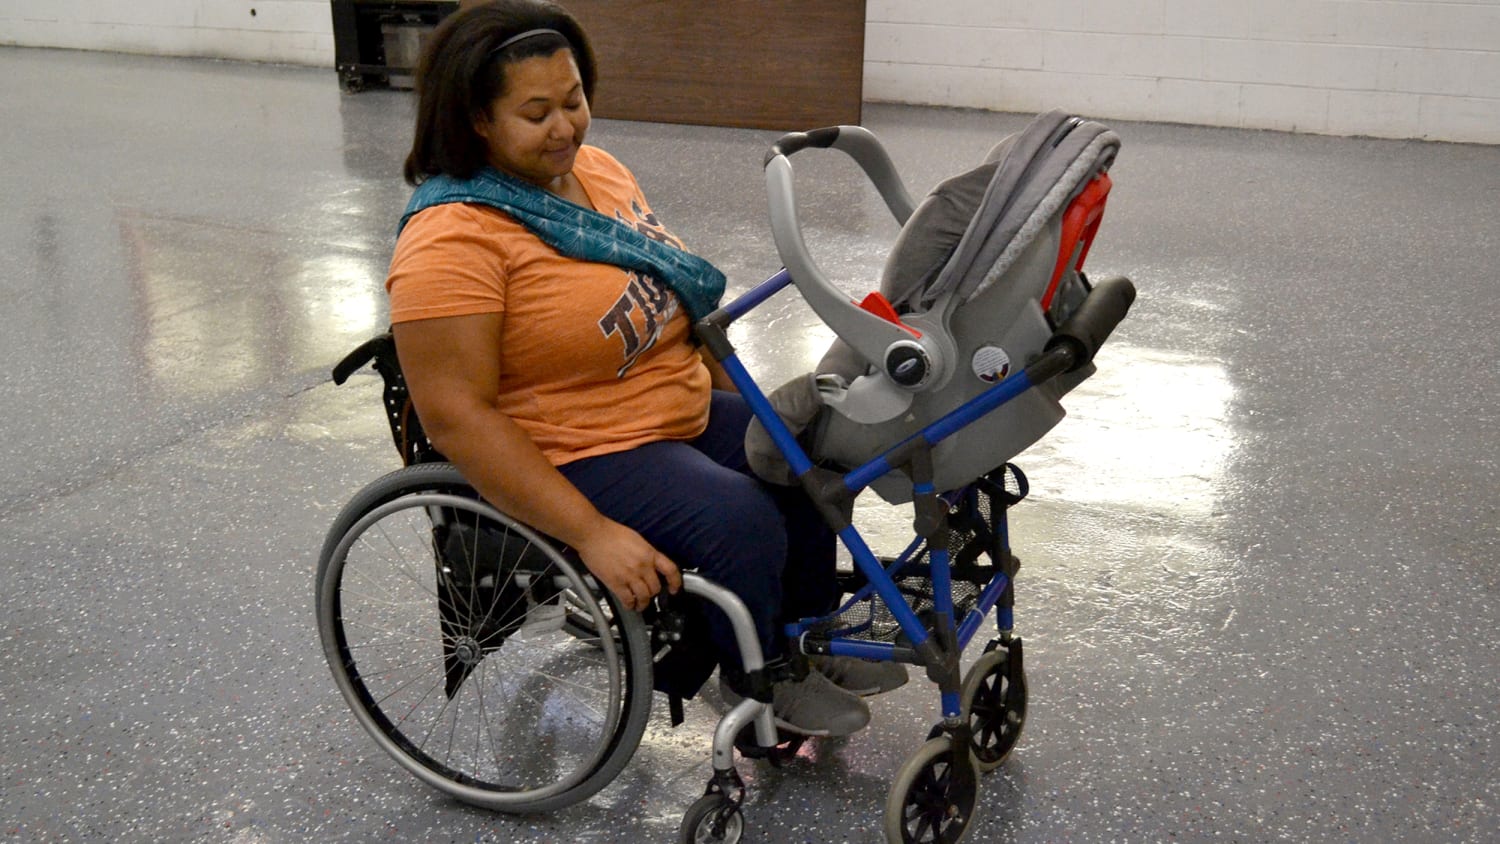 walking stroller for baby